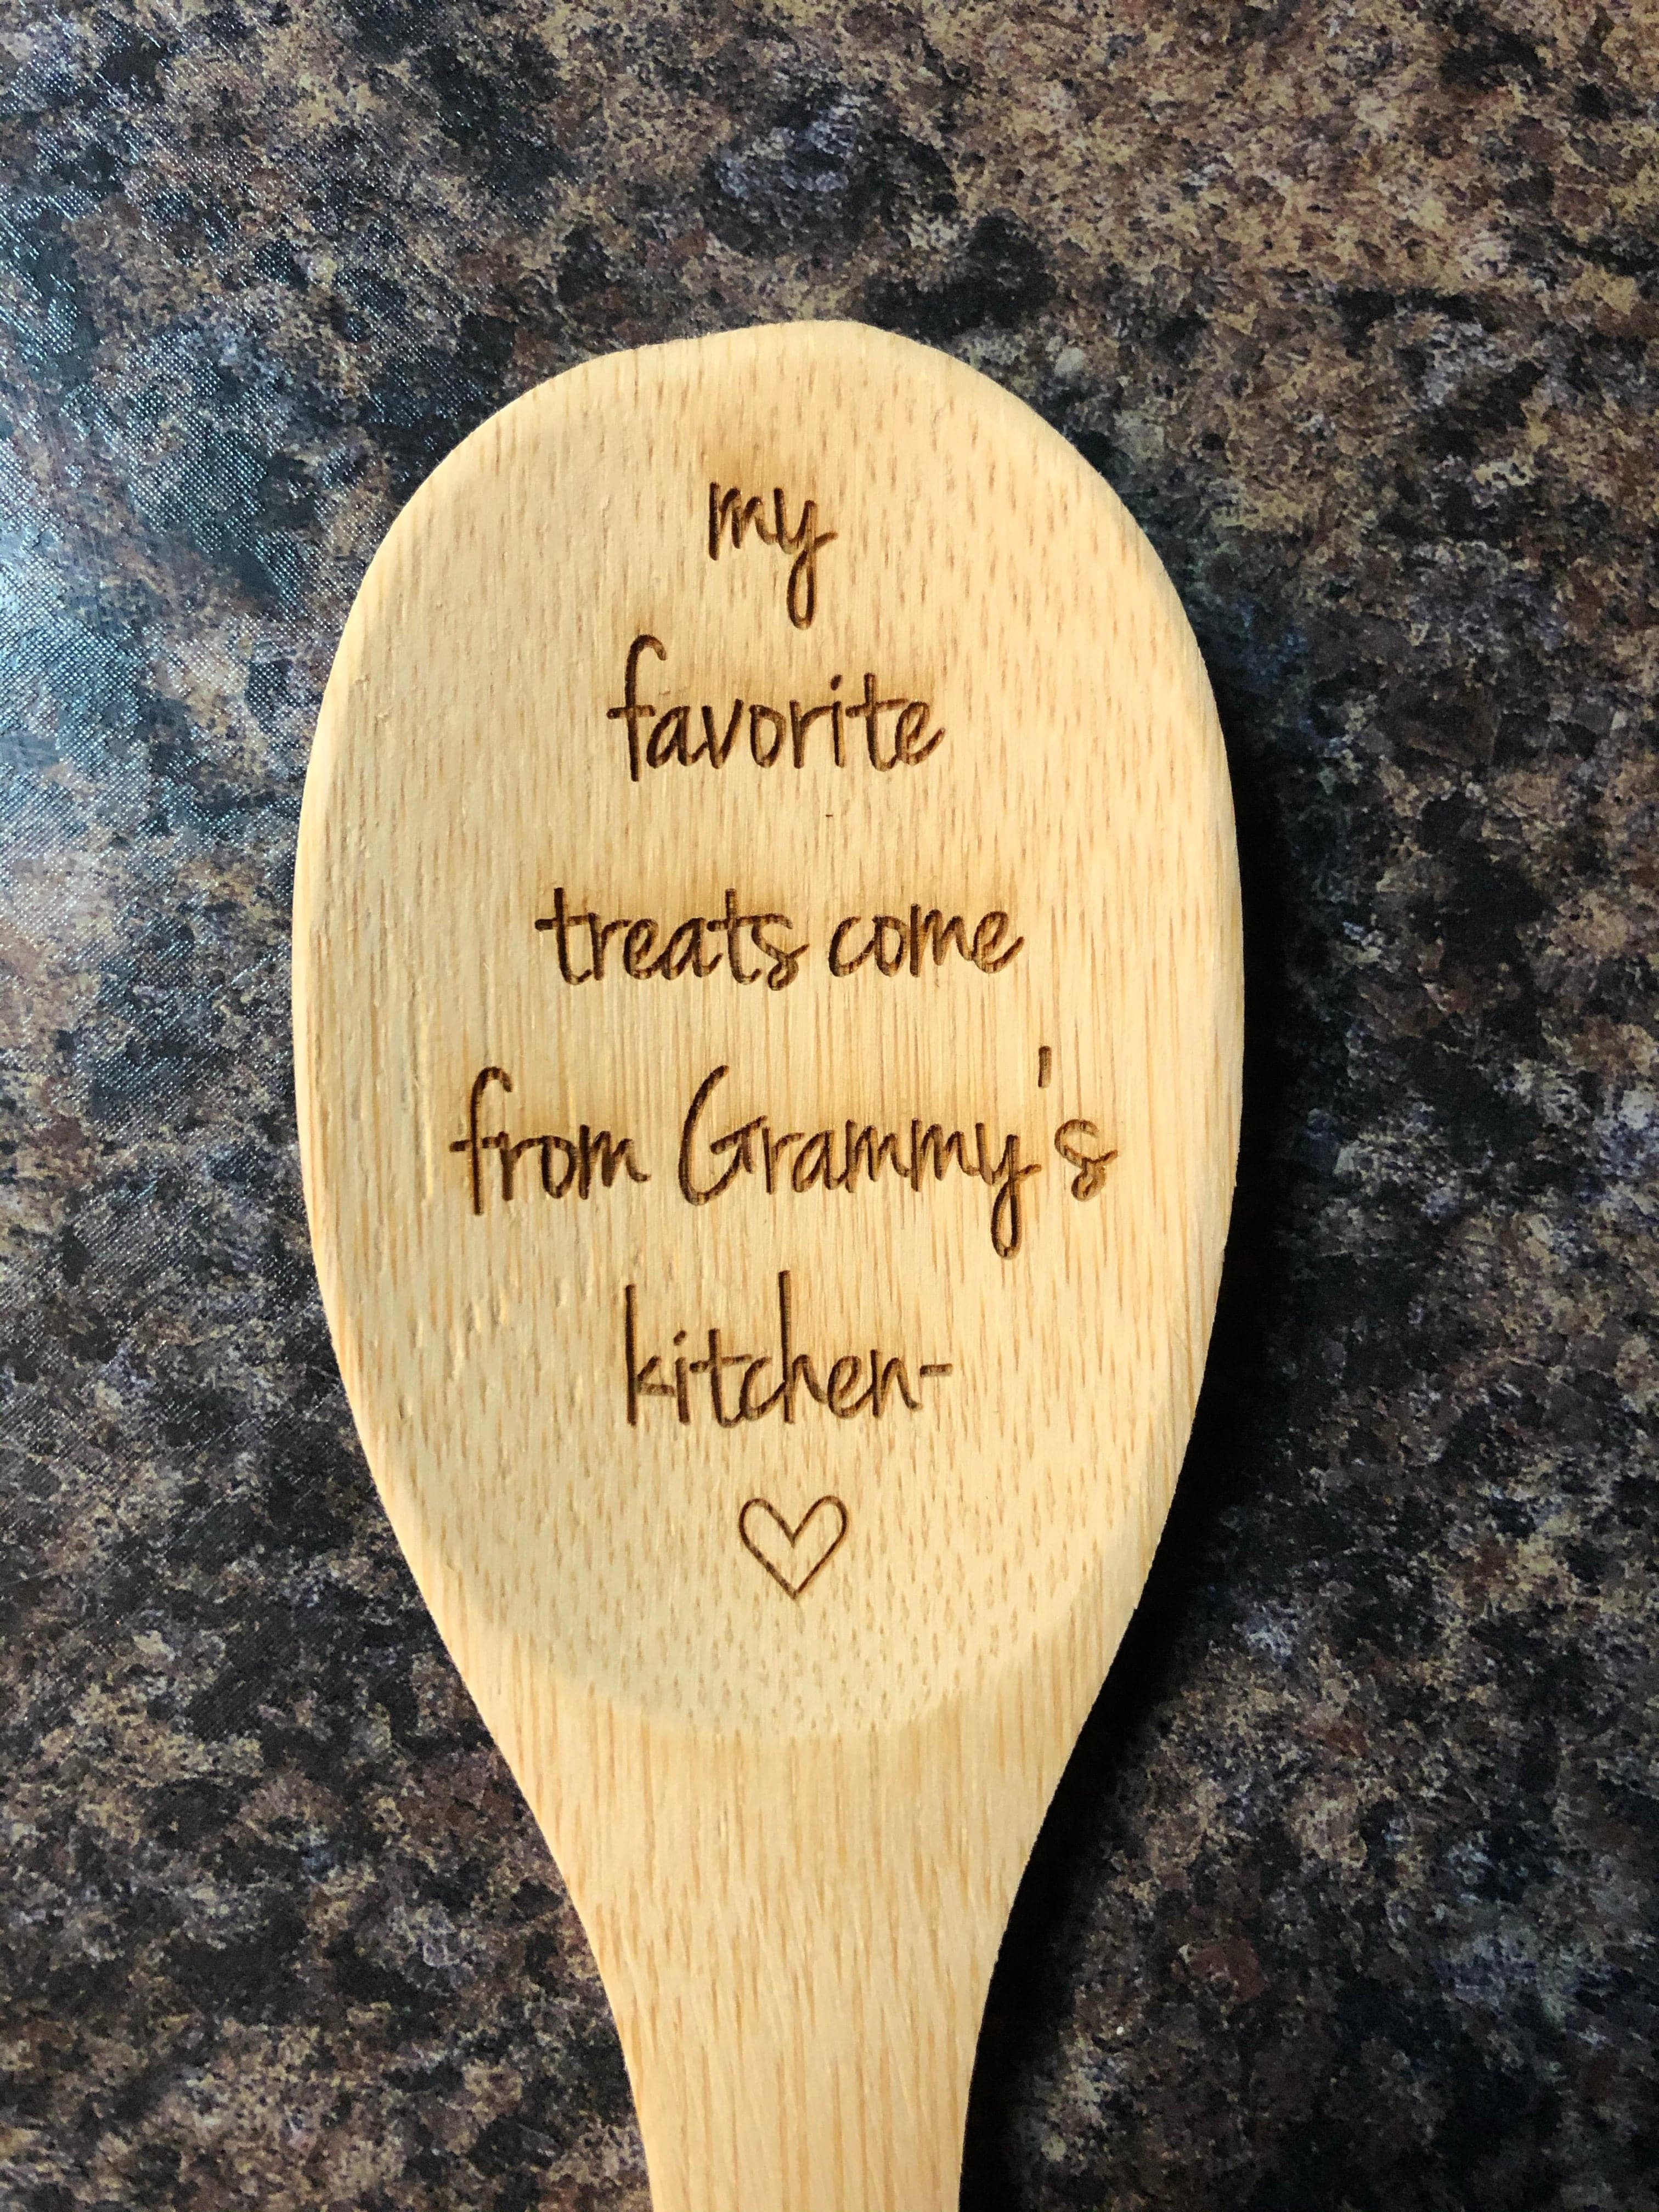 Personalized Wooden Kitchen Utensils Set Grandmother's 